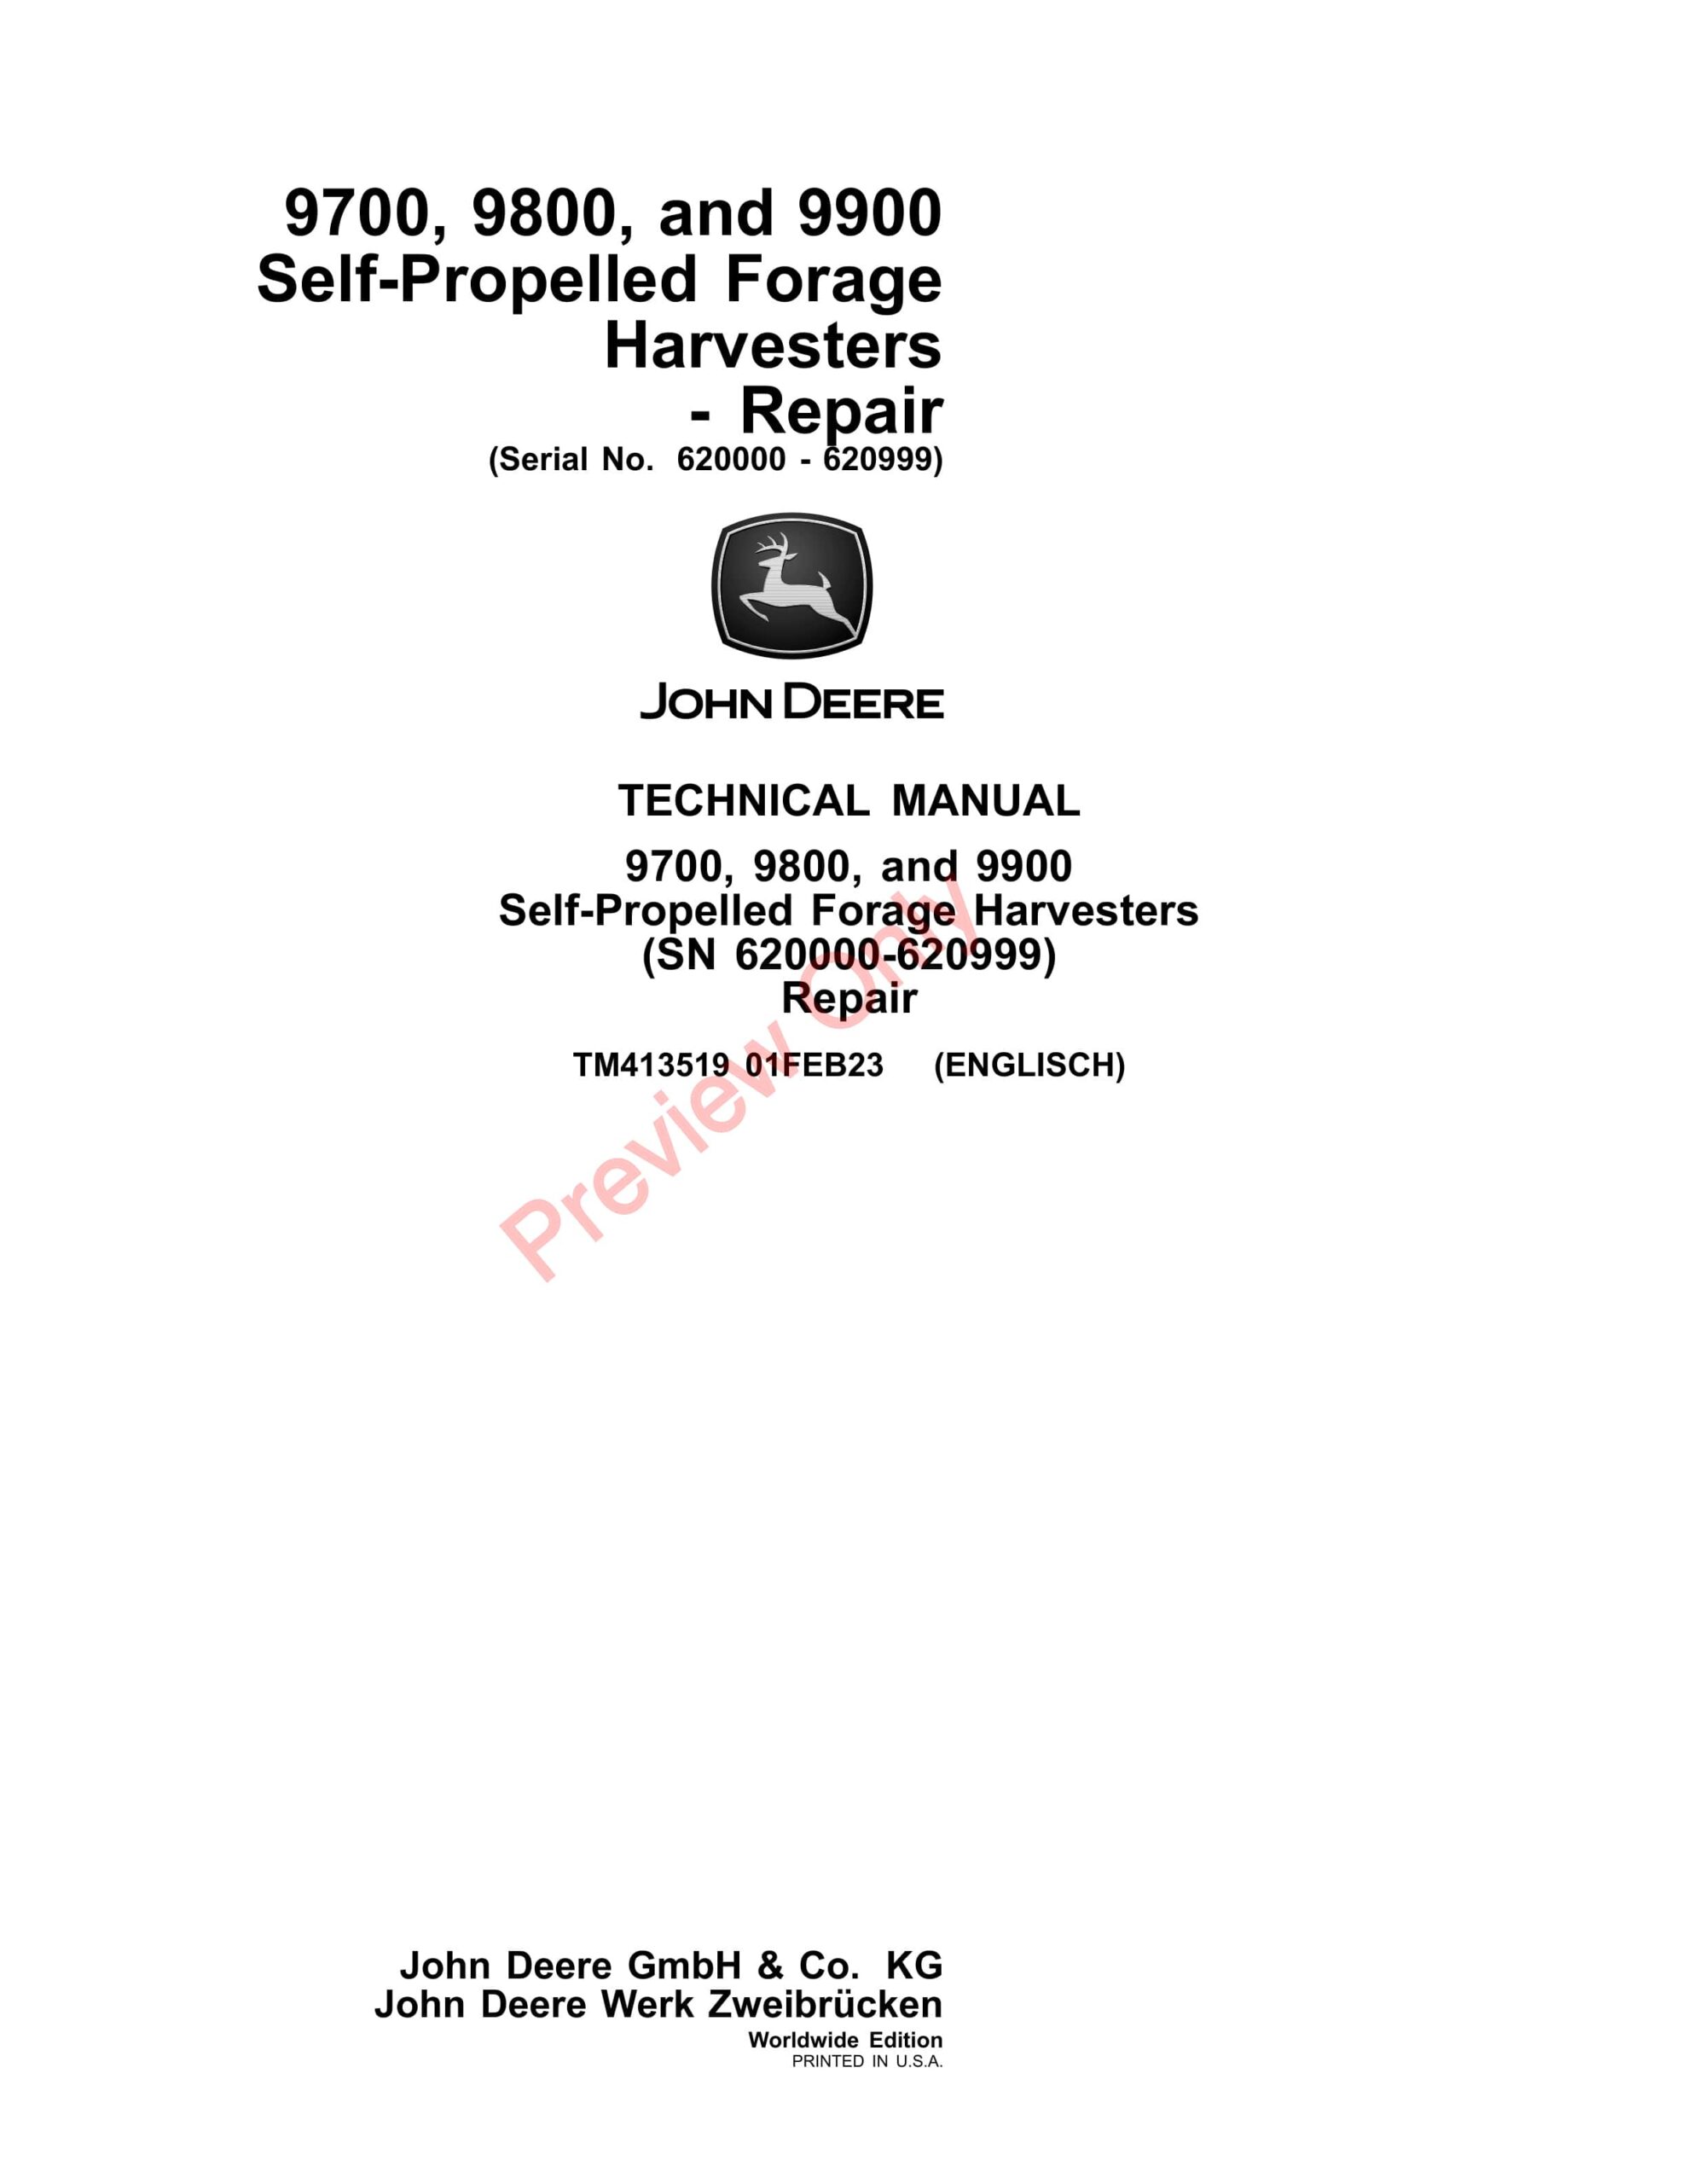 John Deere 9700, 9800, and 9900 Self-Propelled Forage Harvesters Technical Manual TM413519 01FEB23-1